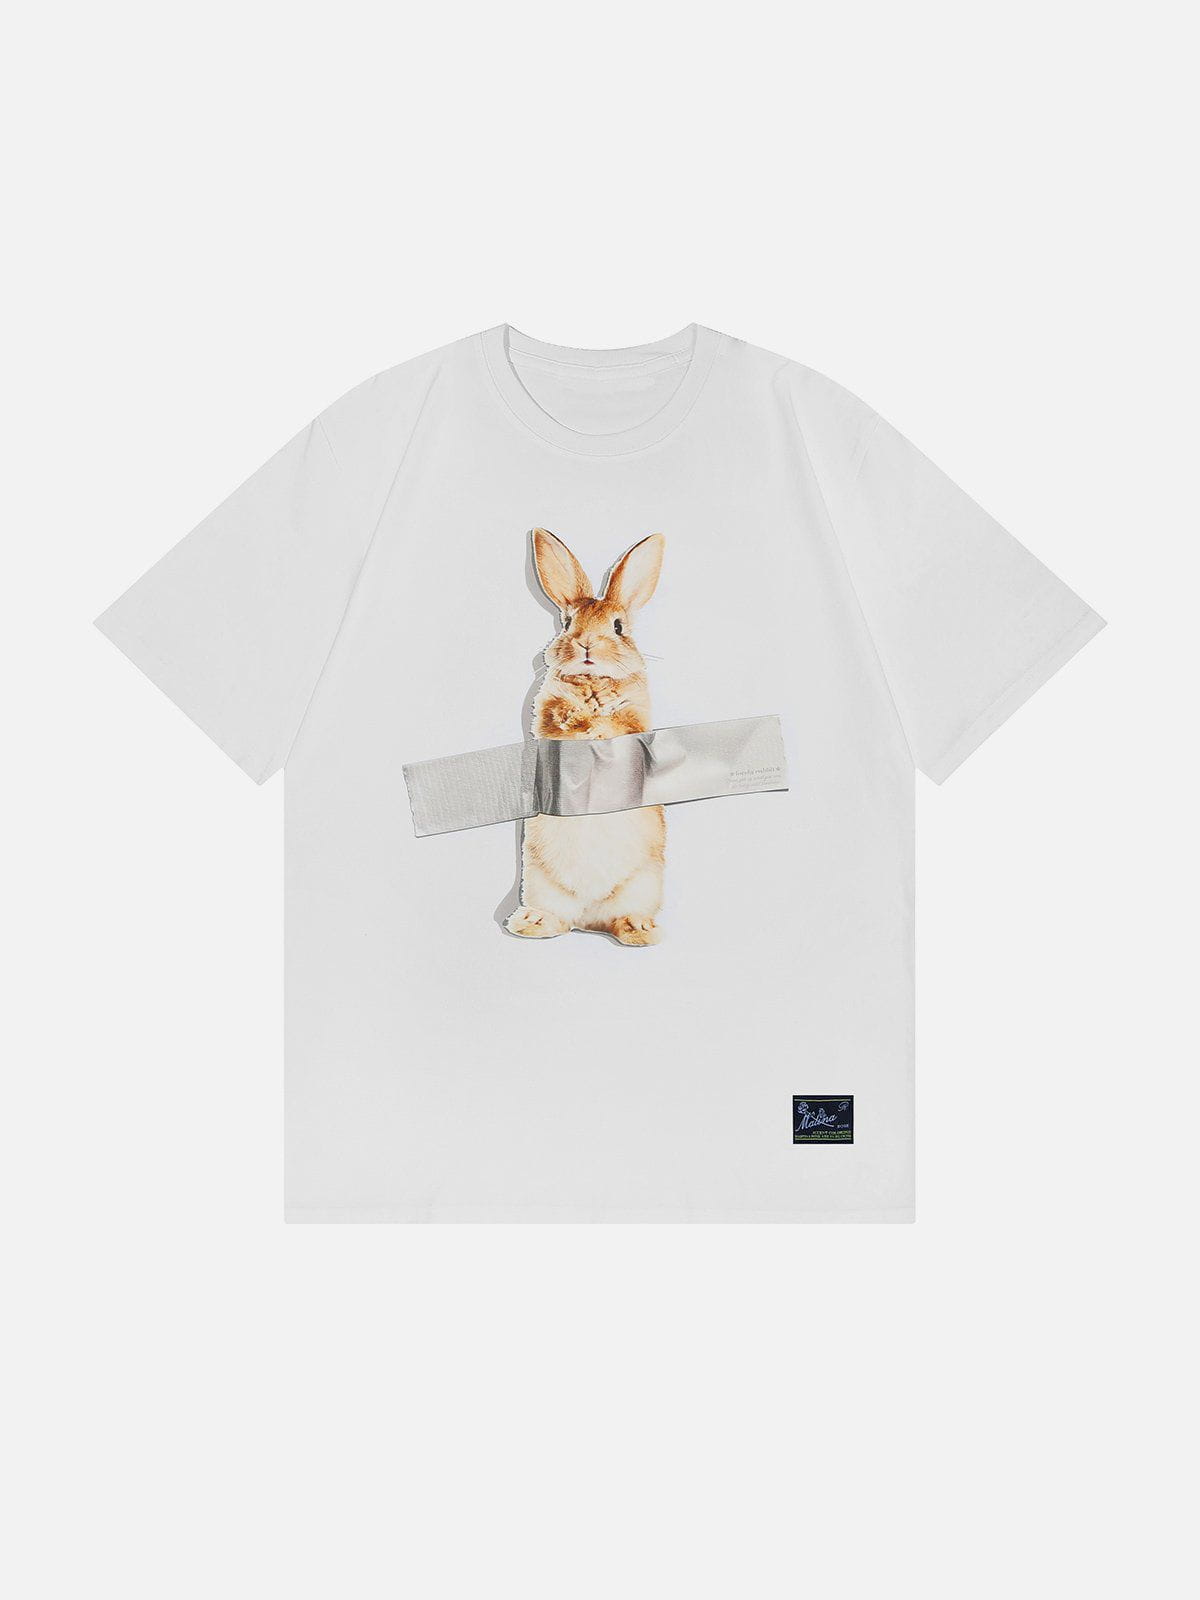 Sneakerland™ - Rabbit Print Tee